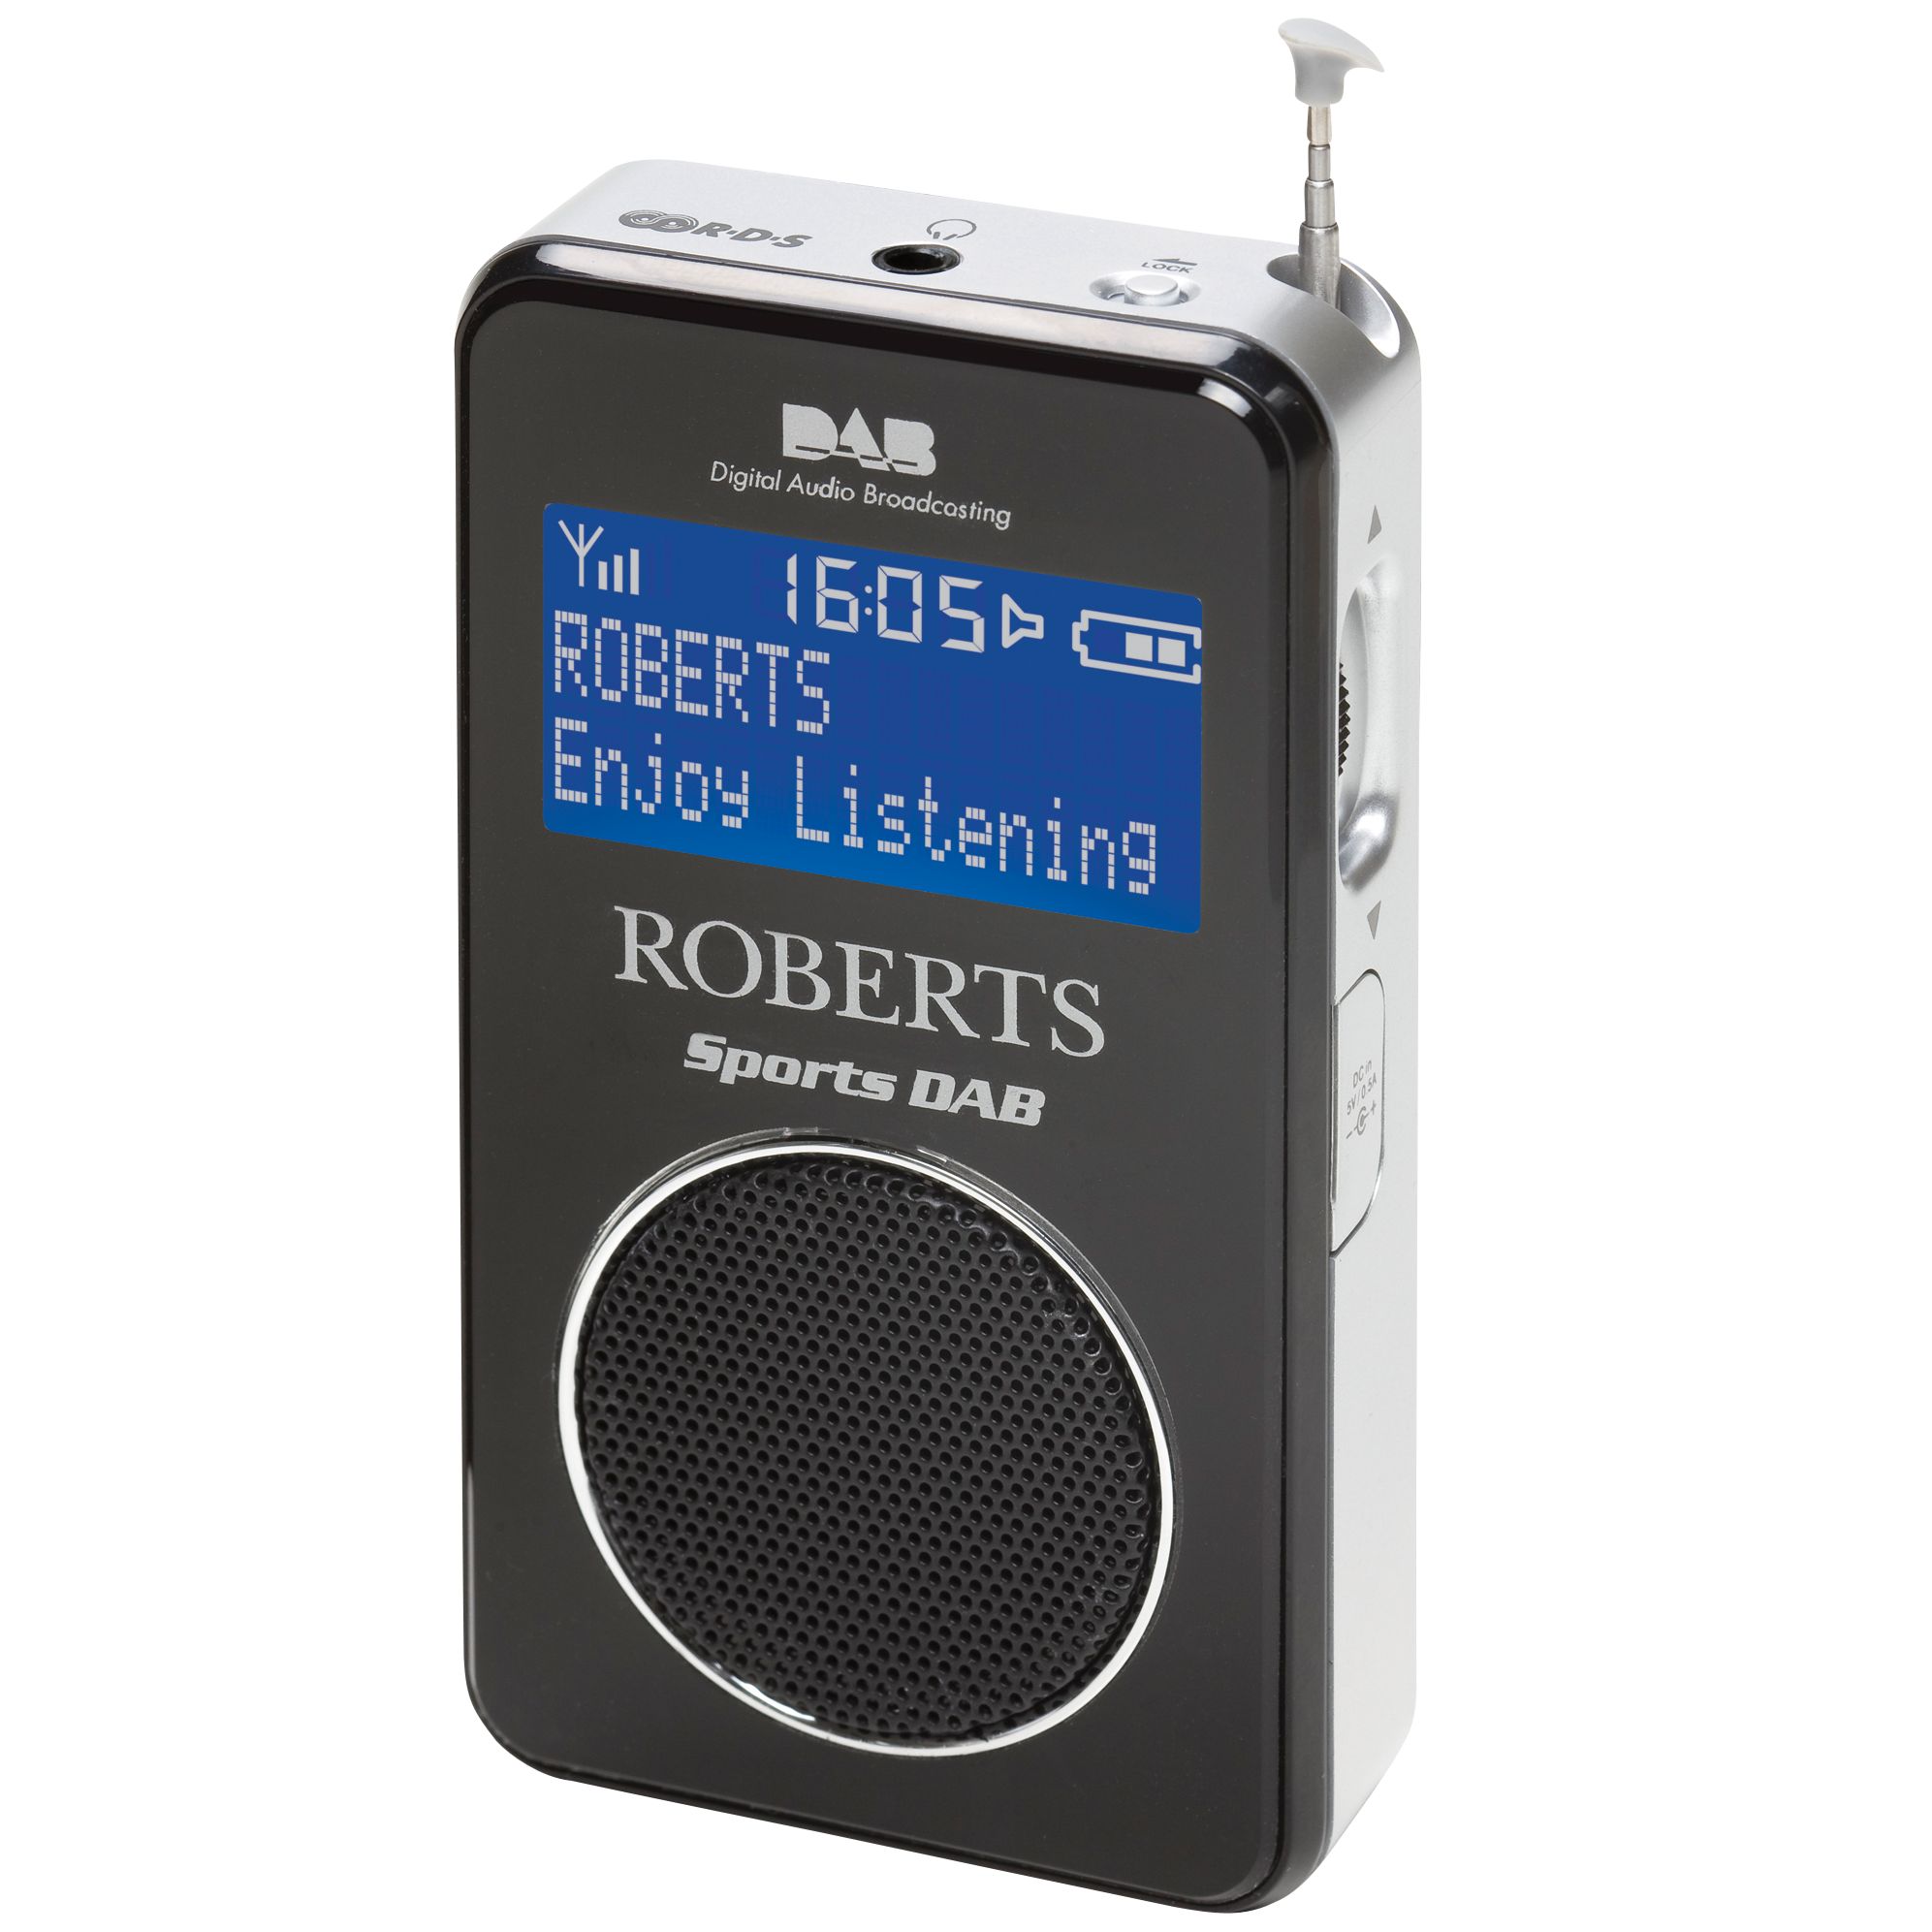 ROBERTS Sports DAB 2 Personal Stereo Radio